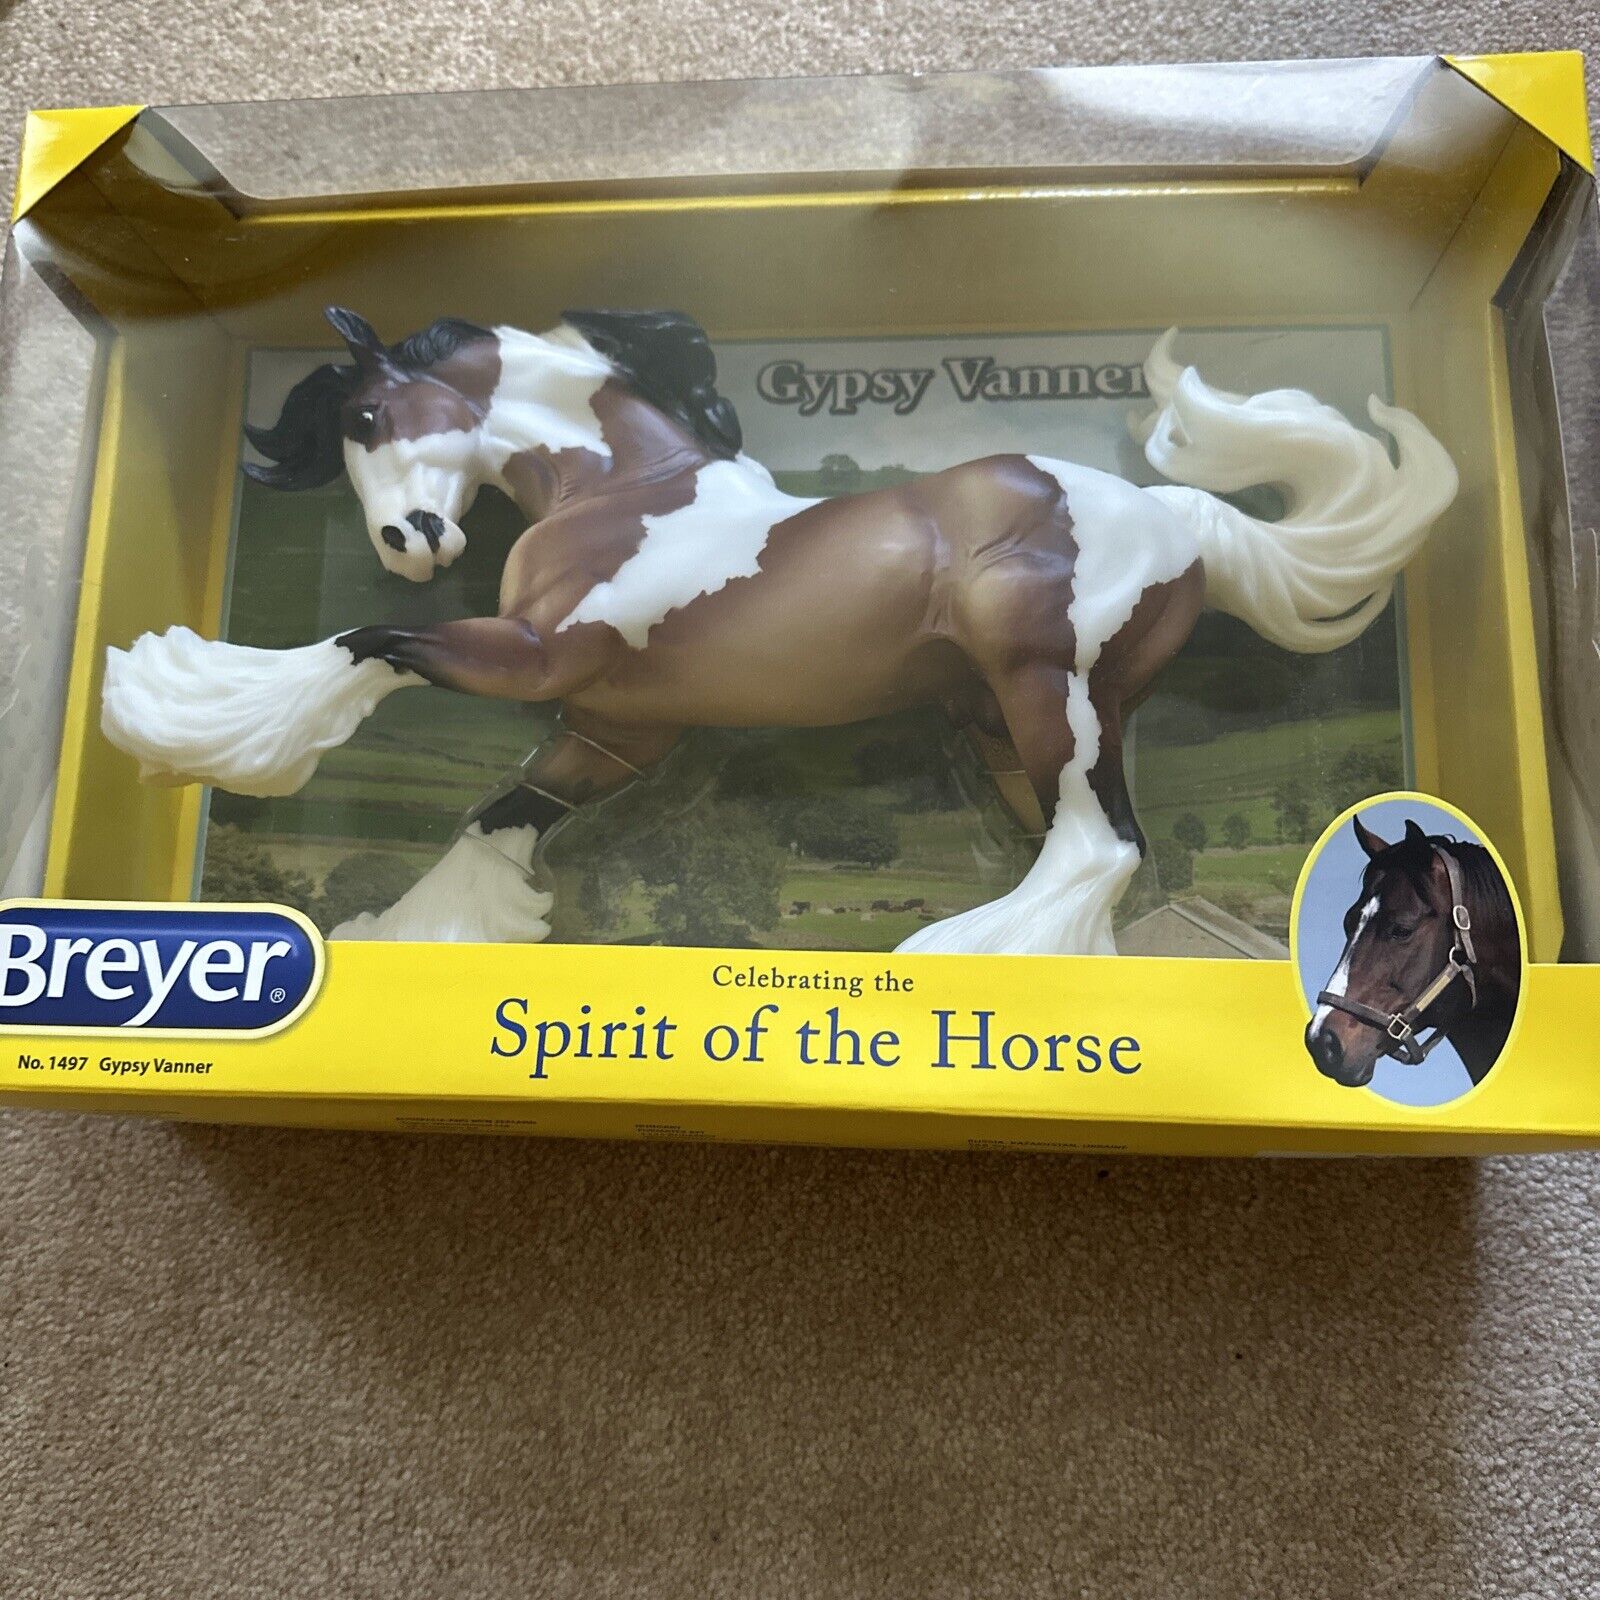 Breyer Gypsy Vanner Figure Celebrating The Spirit Of The Horse NIB No 1497